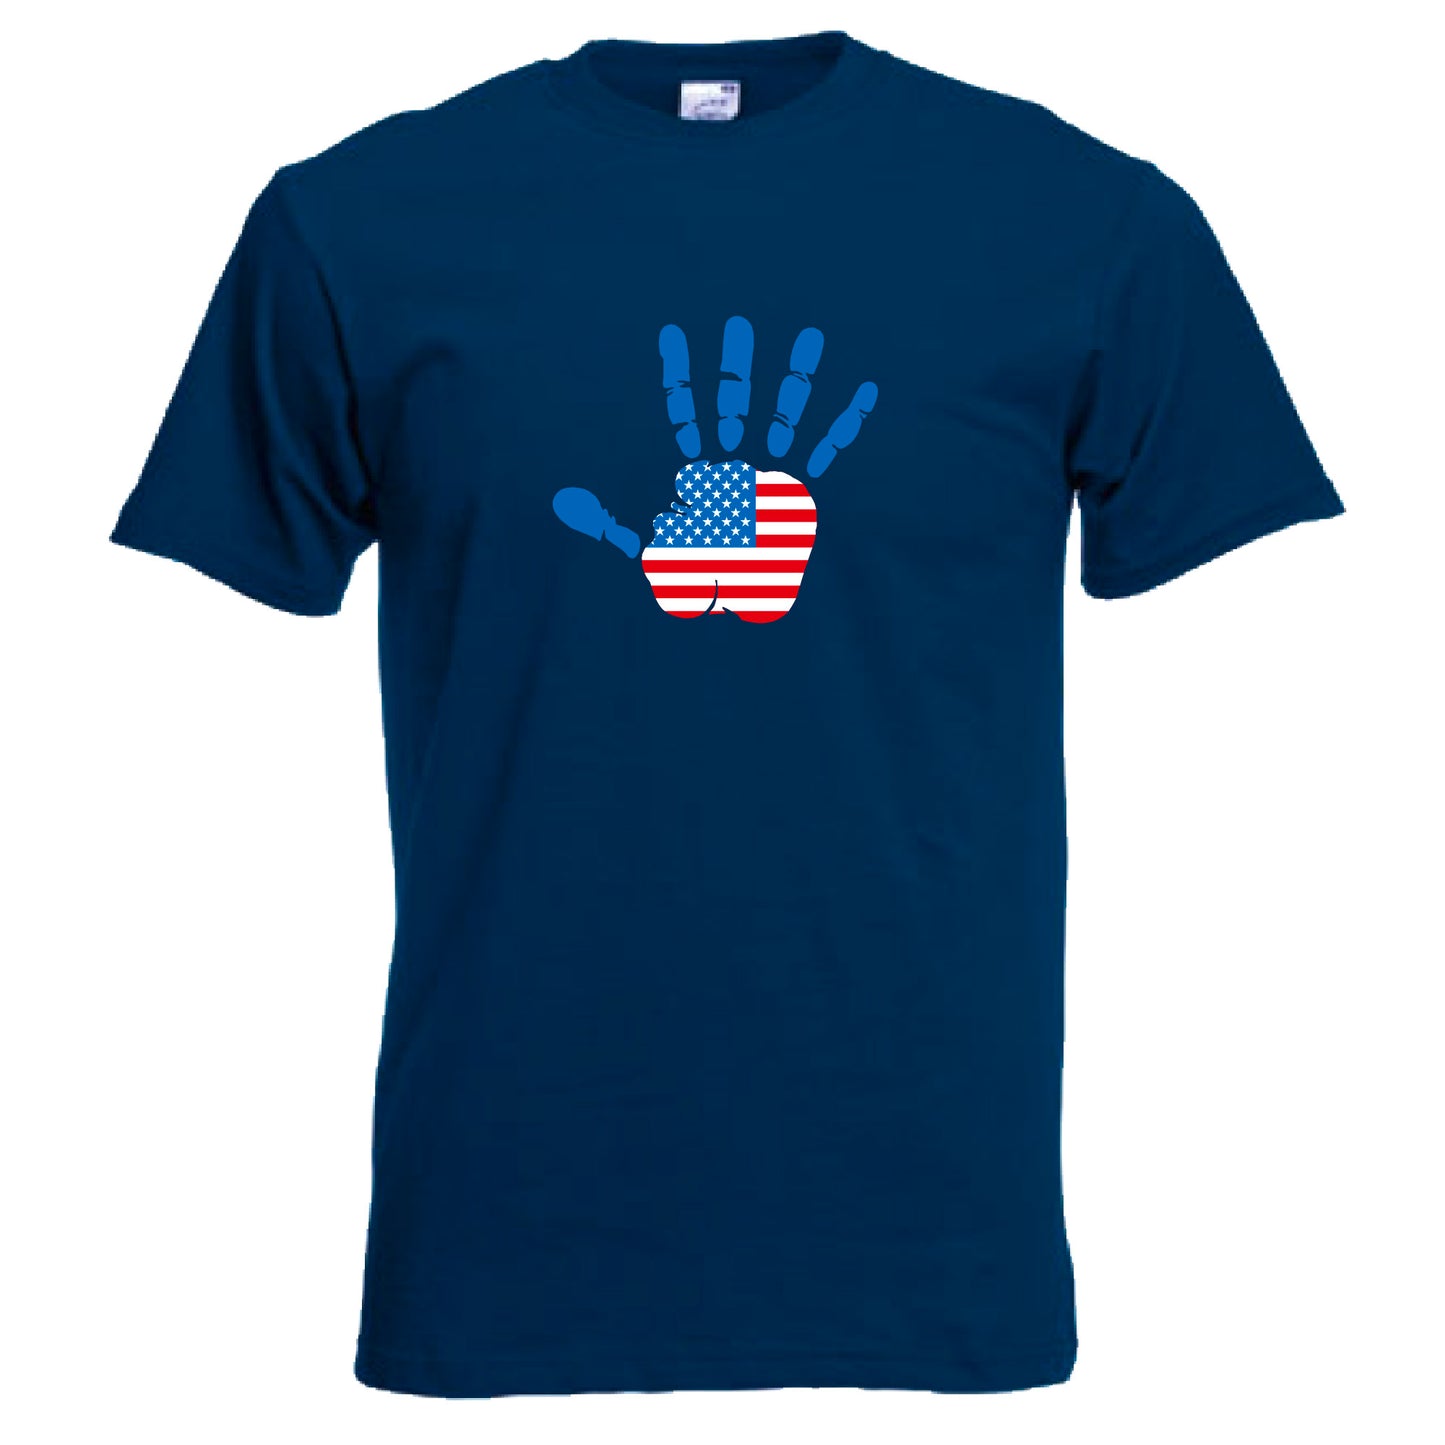 INDIGOS UG - T-Shirt Herren - USA - Hand - Fussball